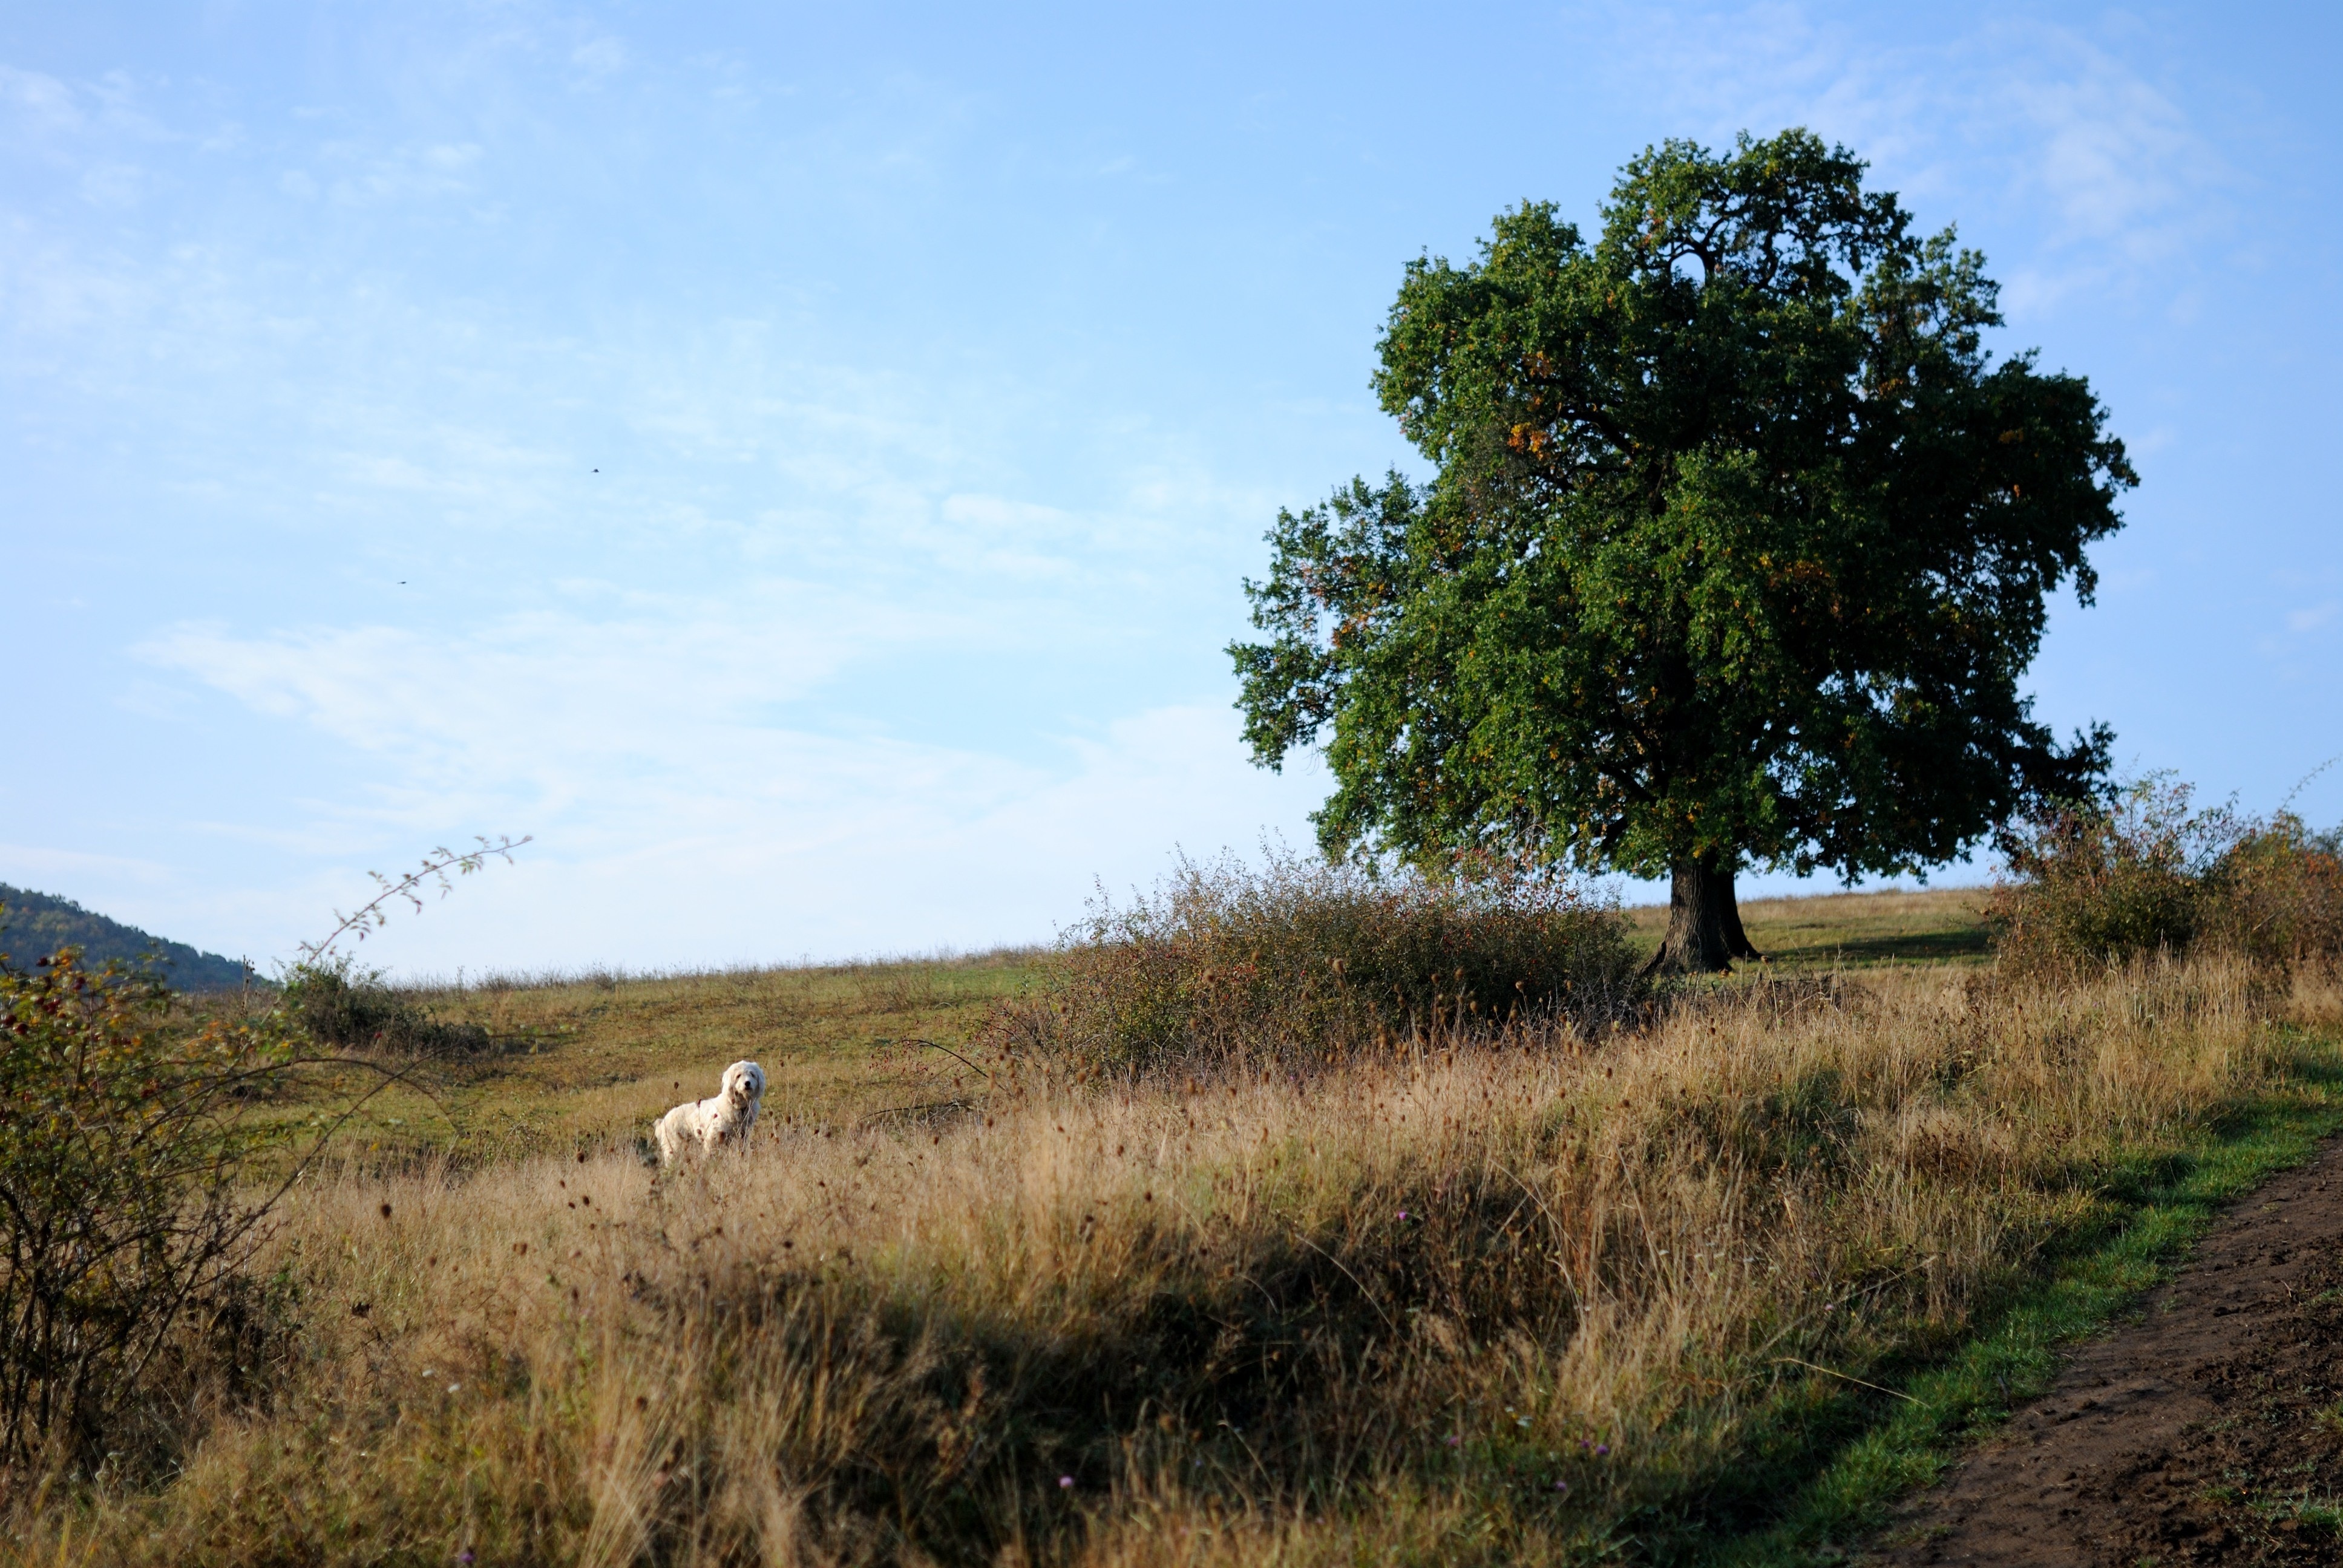 white dog on grass field near tree